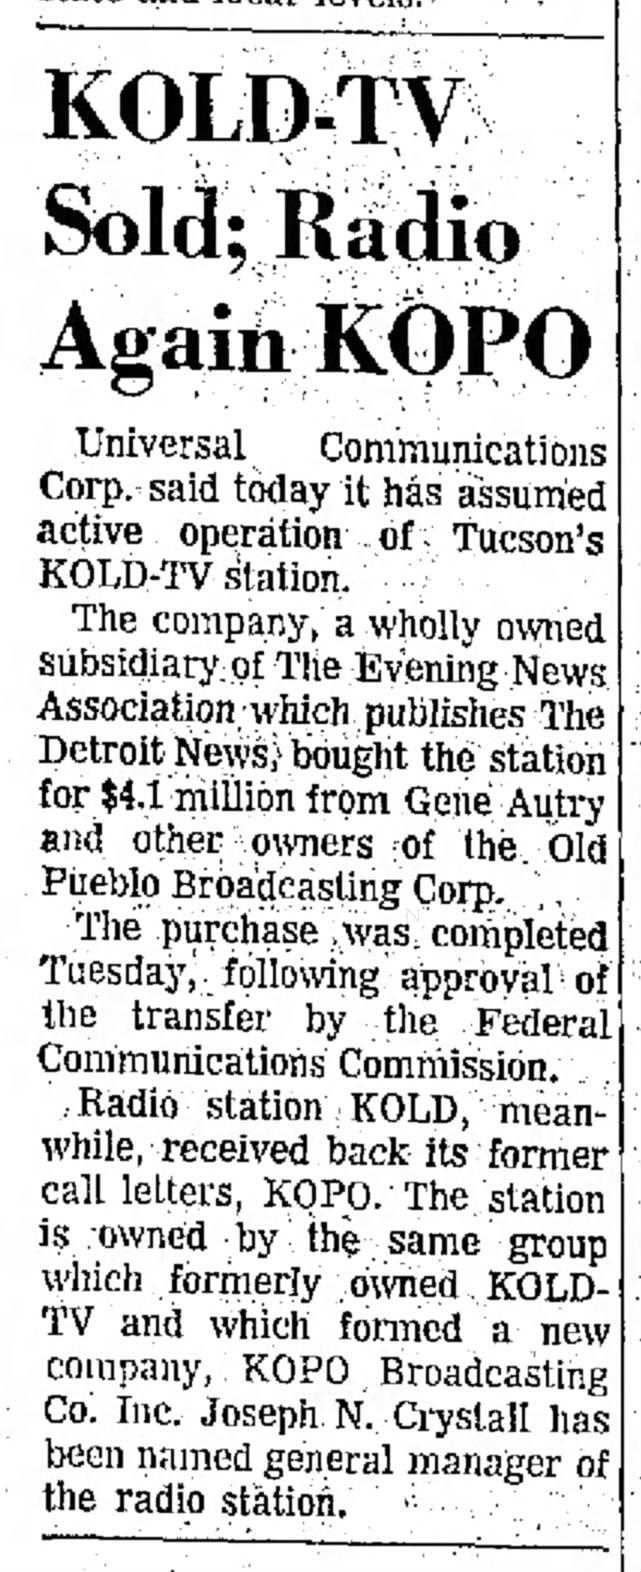 KOLD-TV Sold; Radio Again KOPO